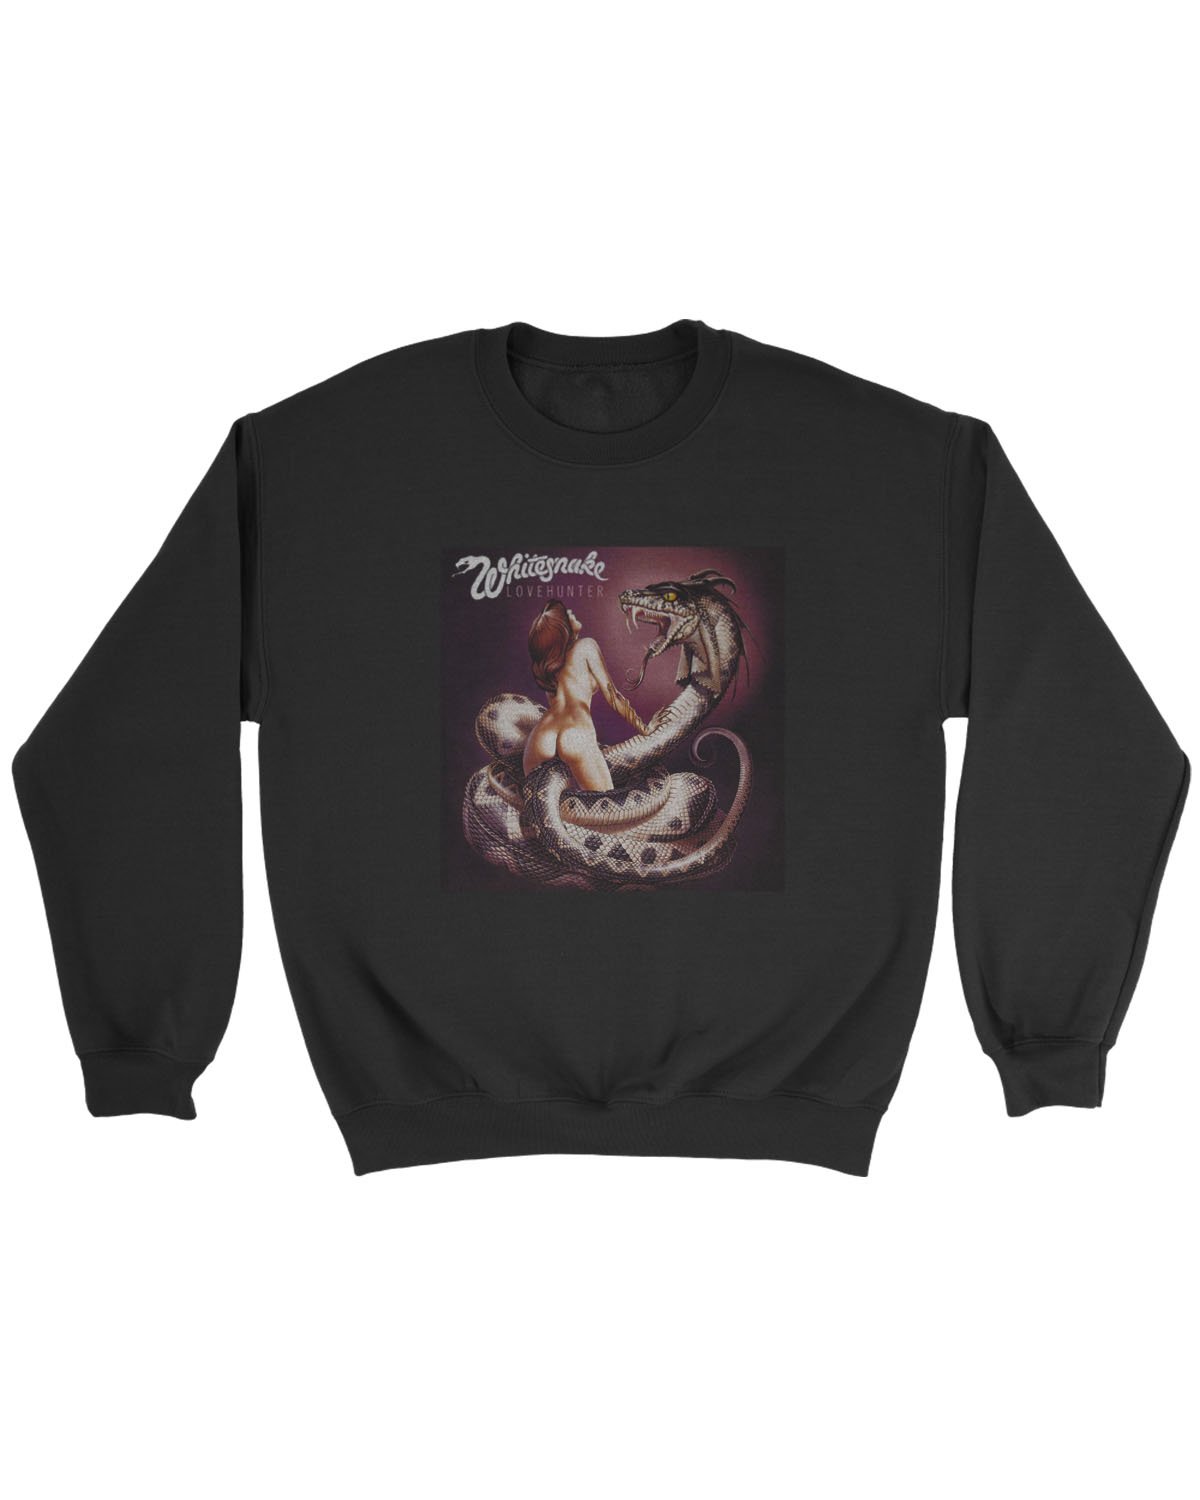 Whitesnake Lovehunter Deep Purple Poster Sweatshirt